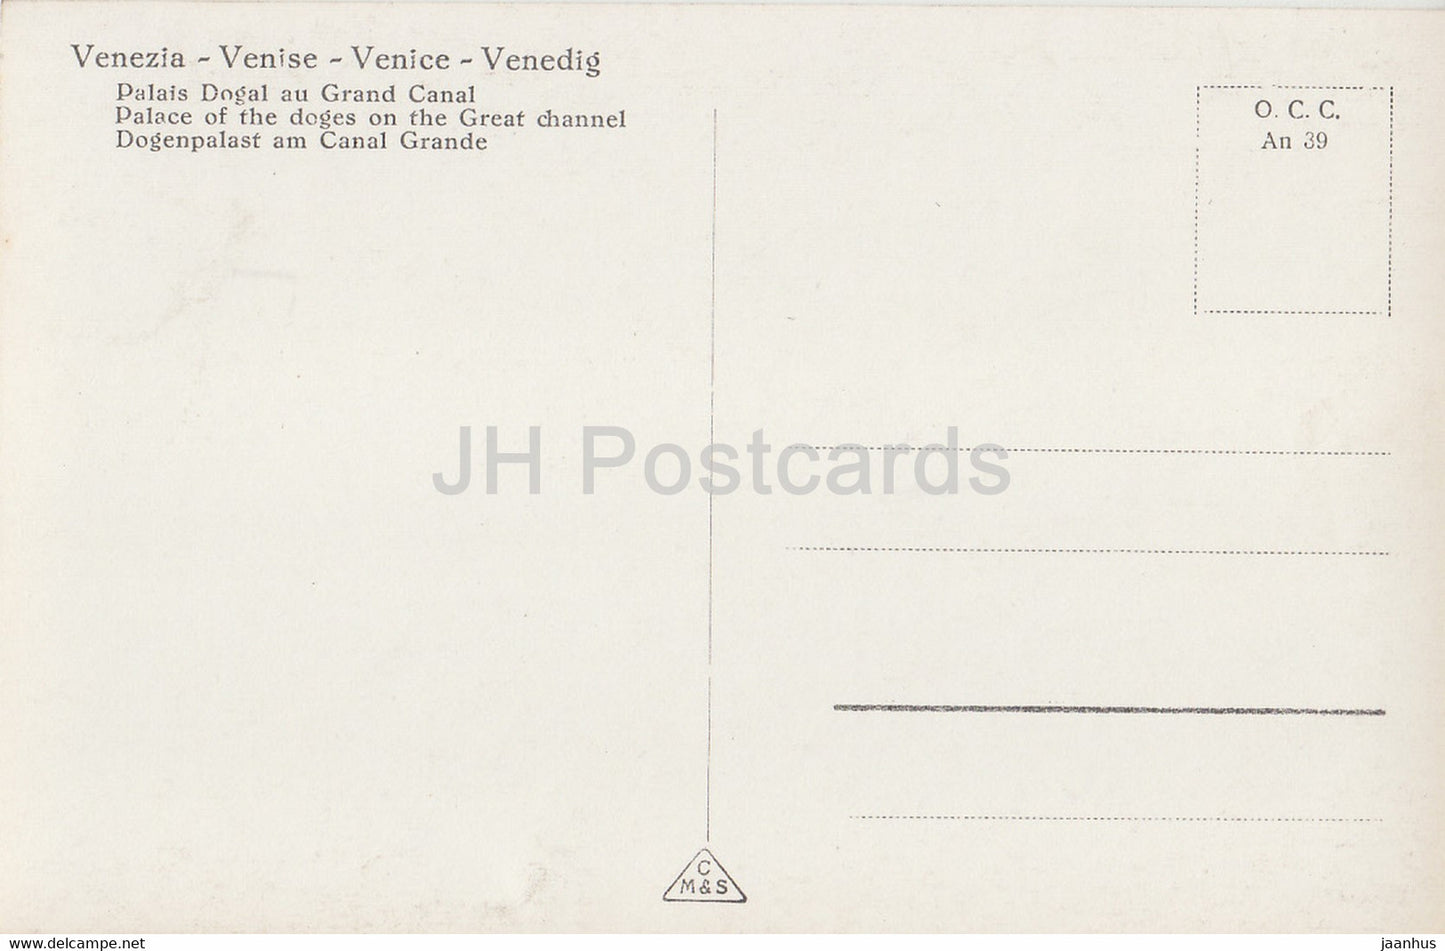 Venezia - Vendig - Venedig - Dogenpalast am Großen Kanal - 645 - alte Postkarte - Italien - unbenutzt